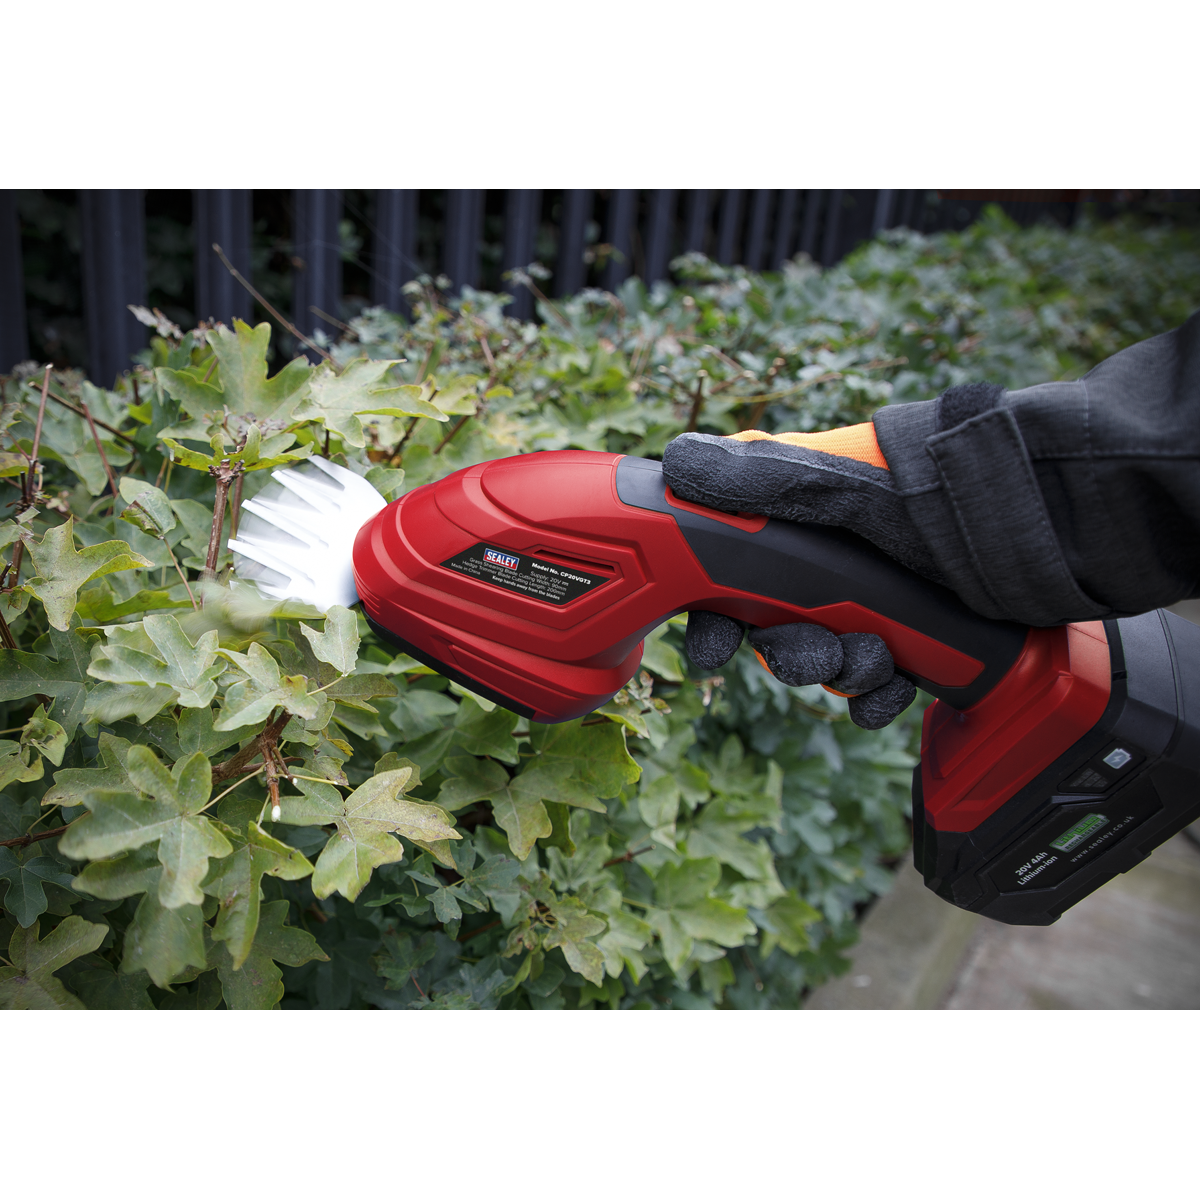 2 x 20V SV20 Series Gardening/Pruning Cleaning Combo Kit